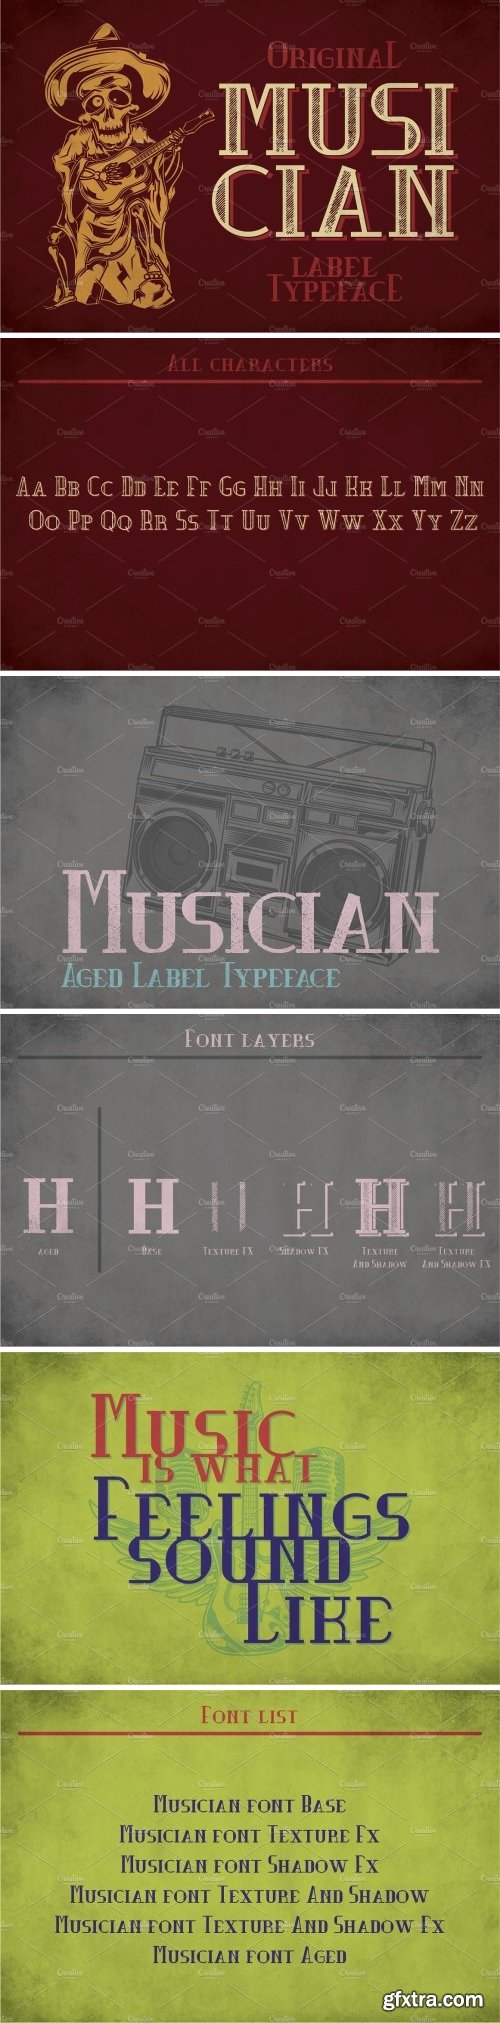 CM - Musician Modern Label Typeface 2091540